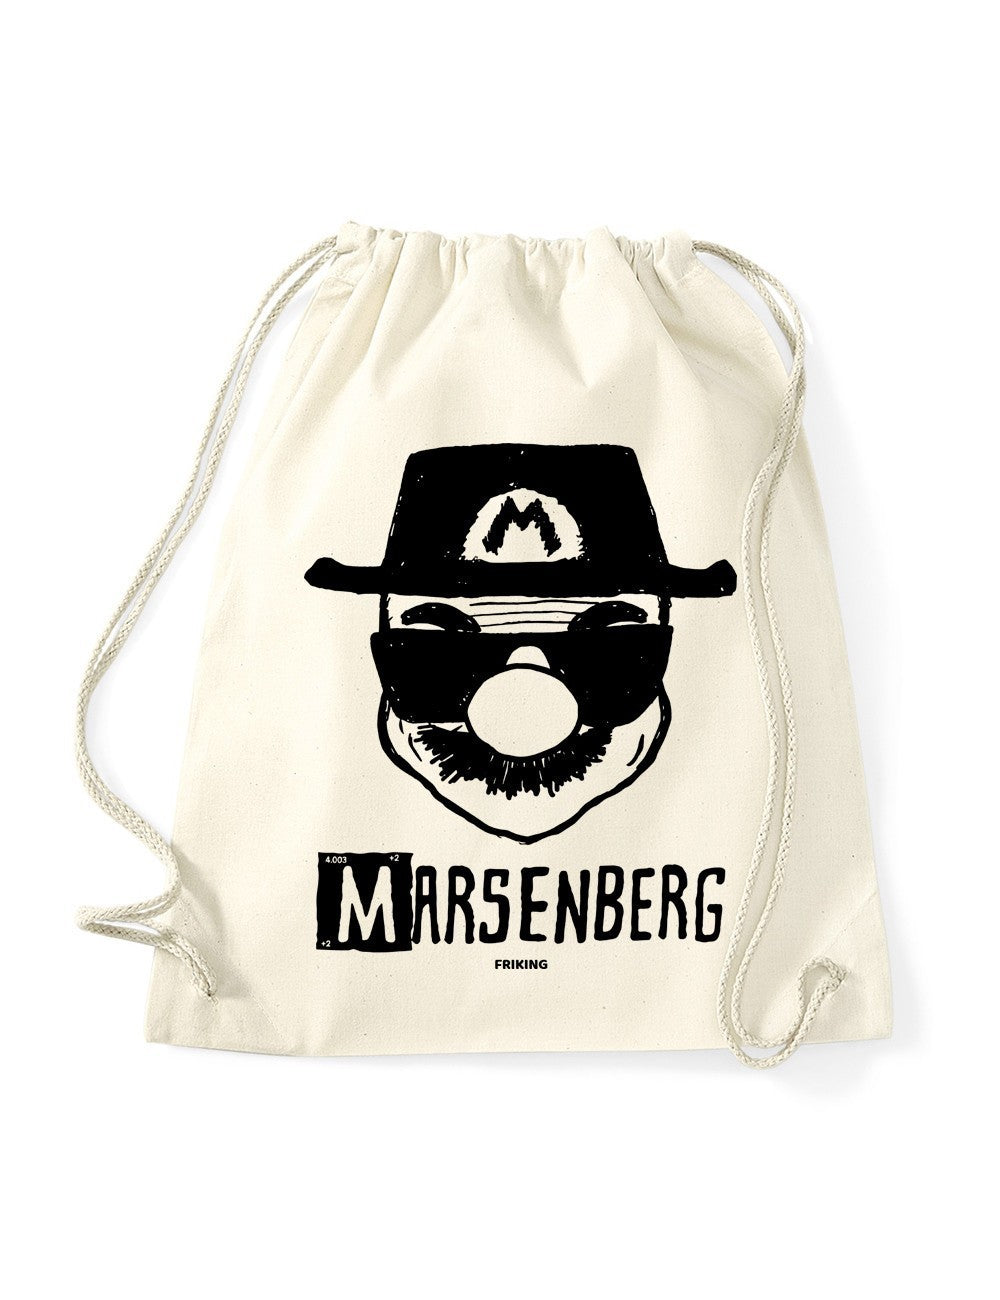  Marsenberg 